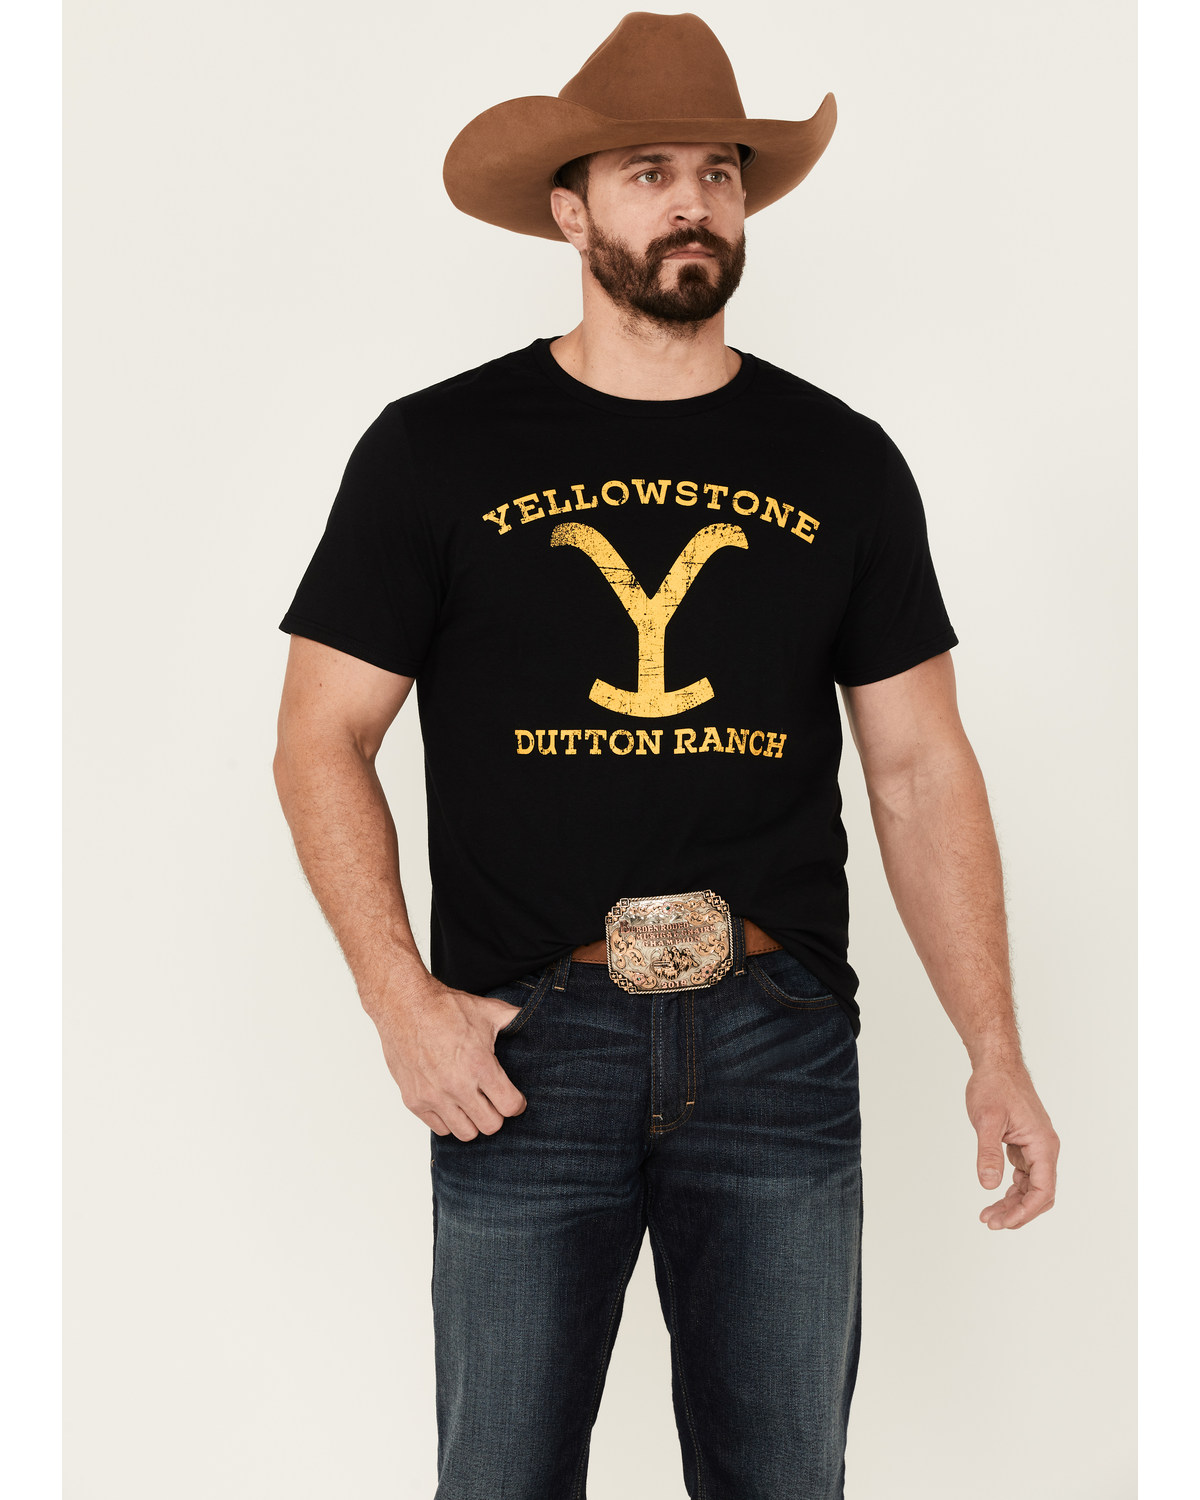 Changes Men's Yellowstone Dutton Ranch Logo Short Sleeve T-Shirt